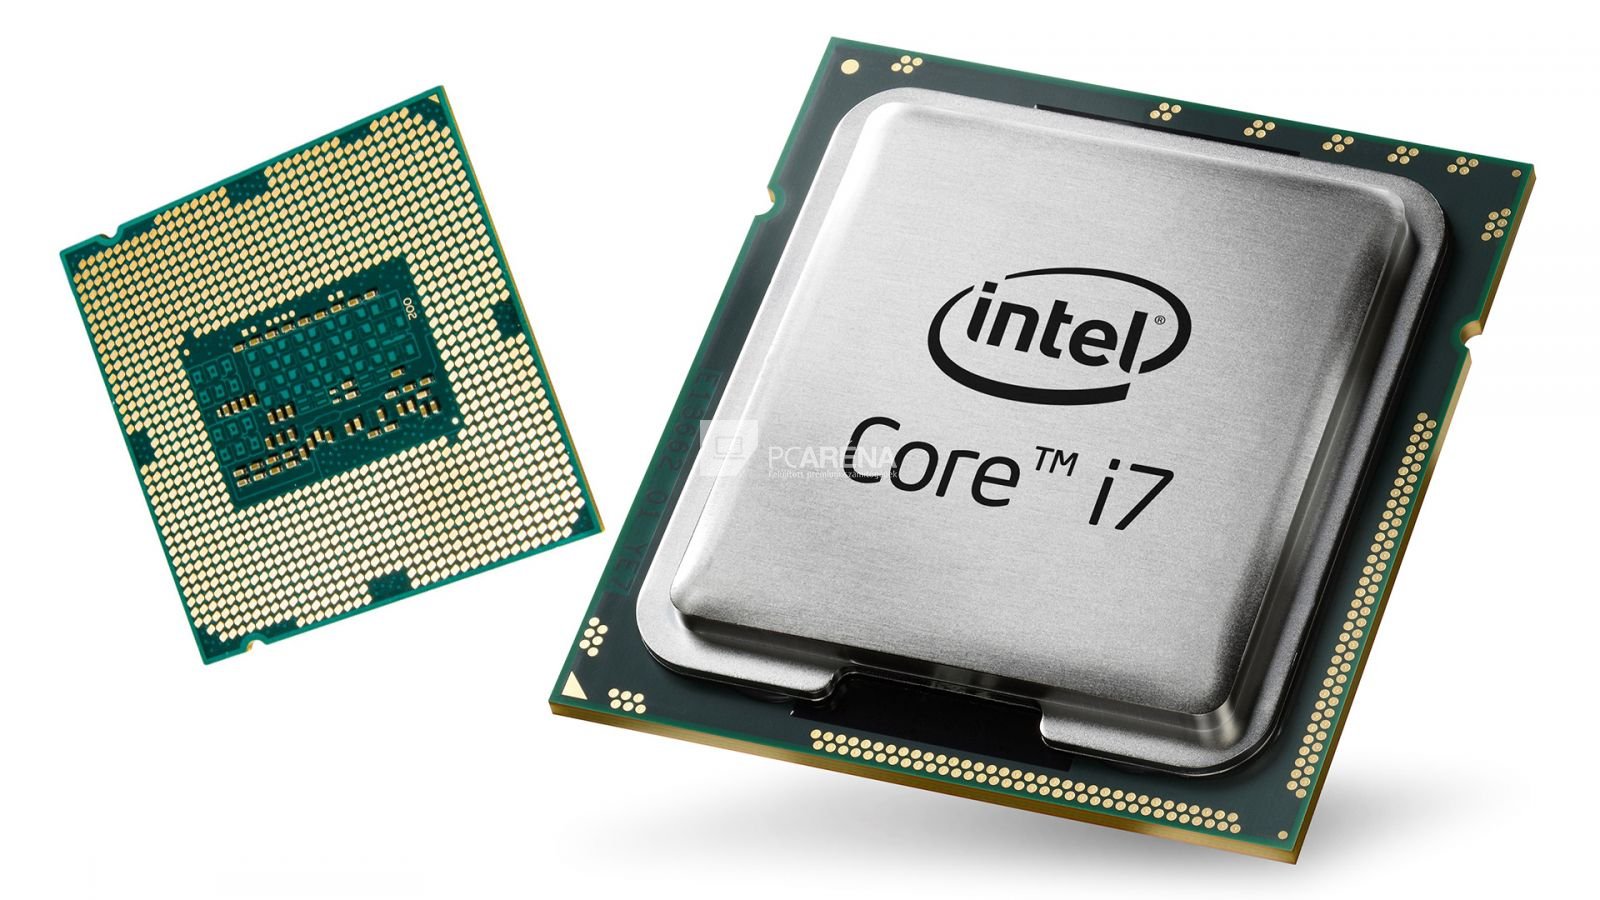 Интел core i3. Процессор Интел i3. Процессор Intel Core 3. Интер кор 3. I3 процессоры DNS.